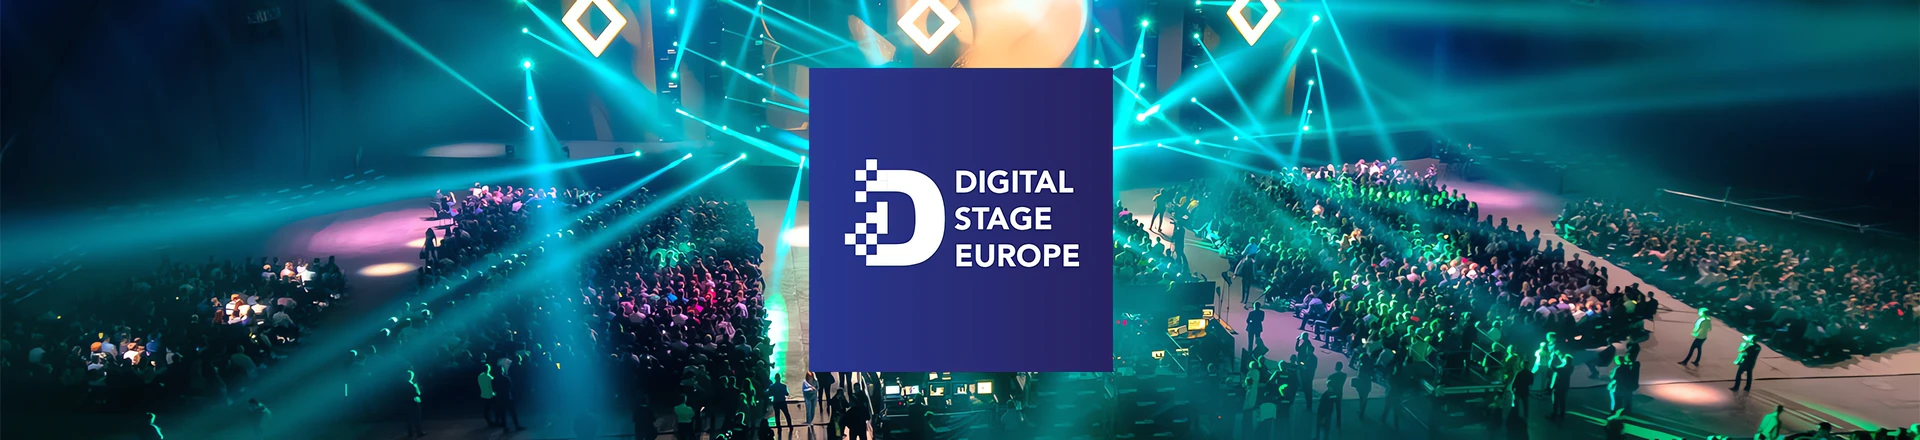 Targi Digital Stage Europe już w marcu